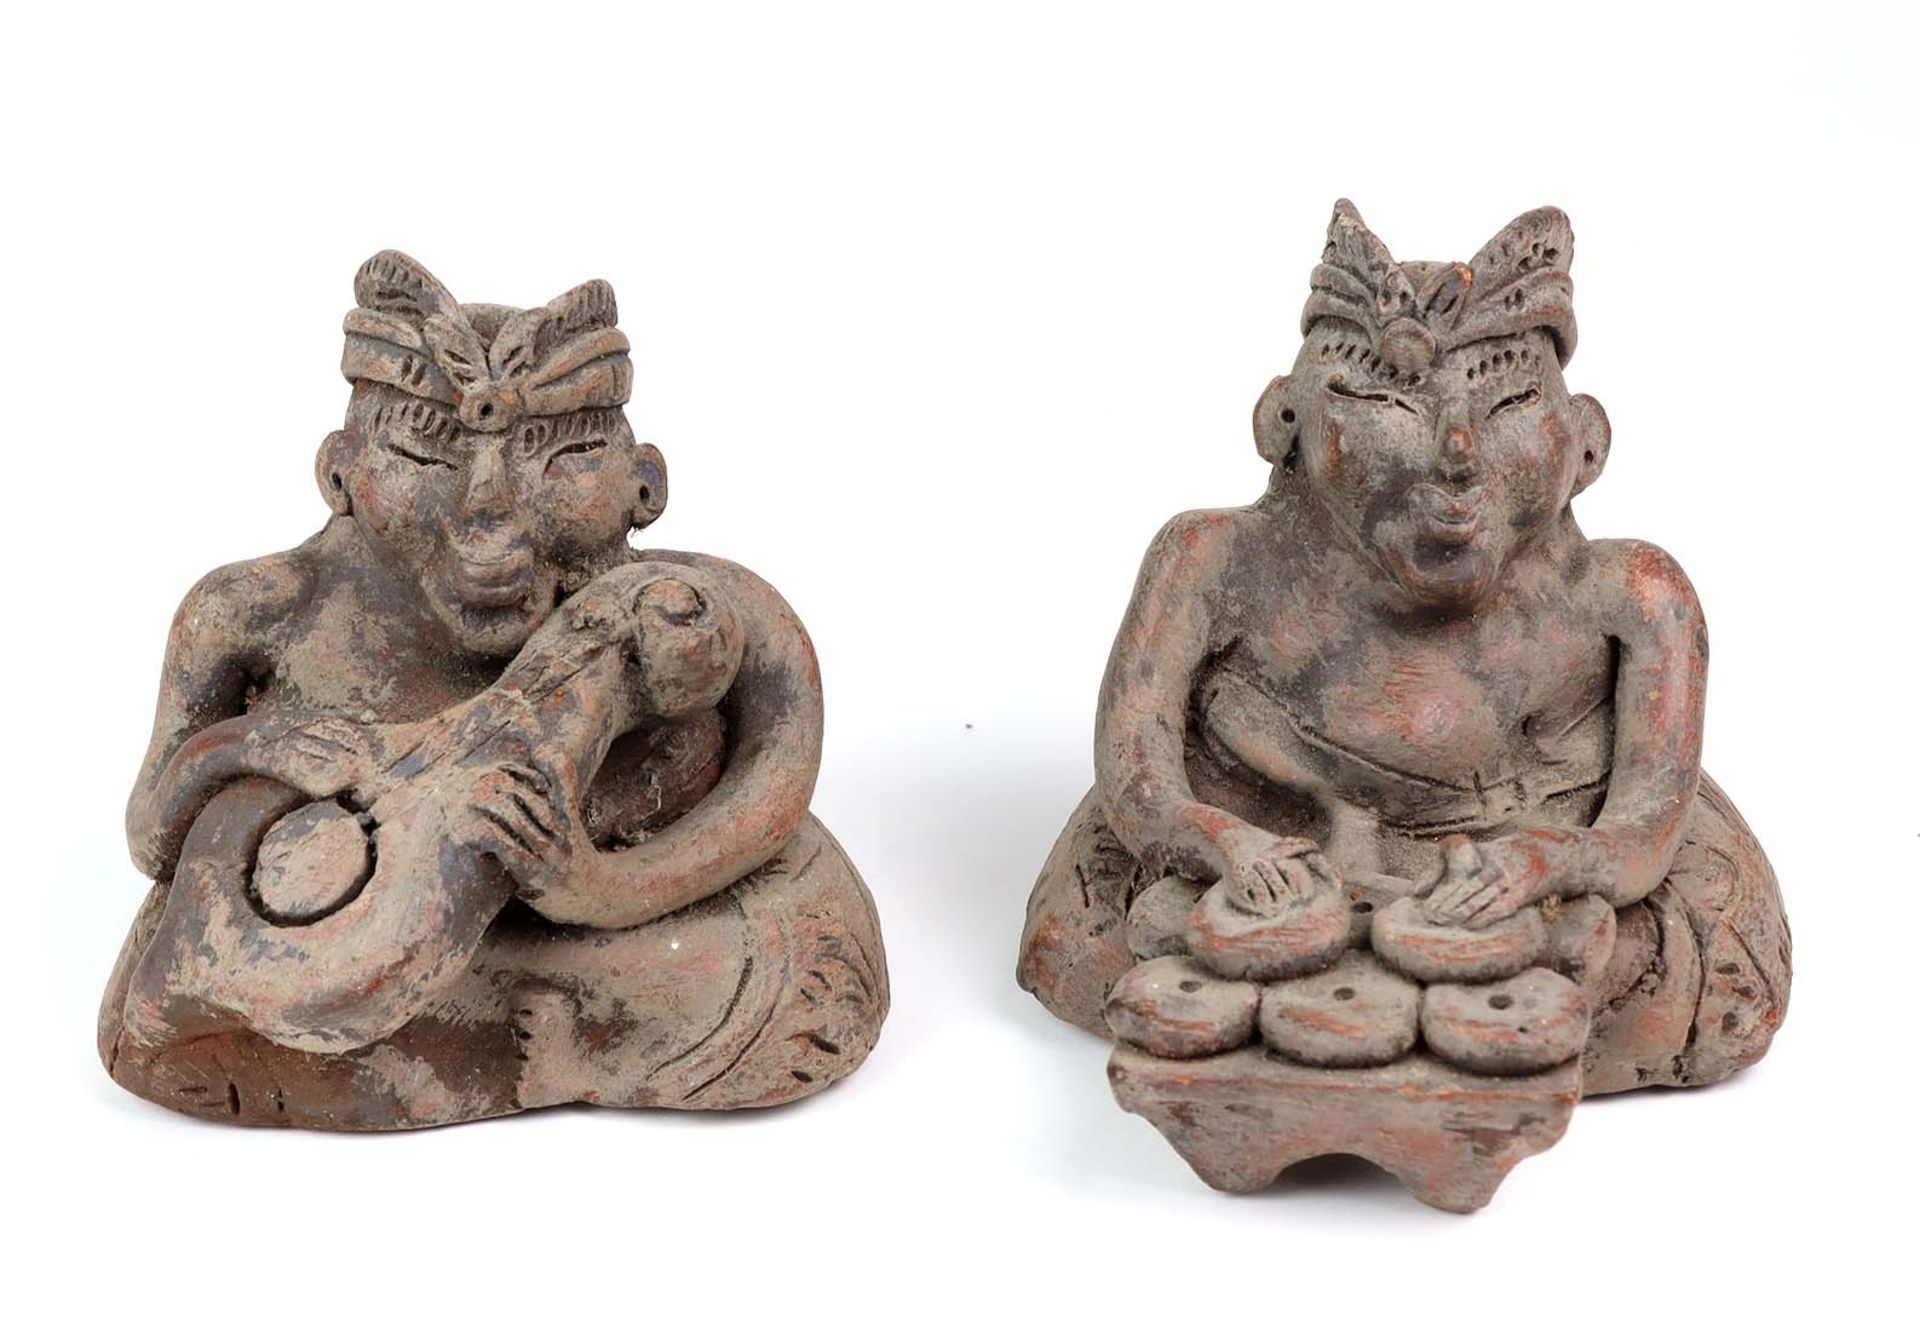 2 asiatische Keramik Figurenrotbrauner handgemodelter Scherben, je sitzend mit Musikinstrument